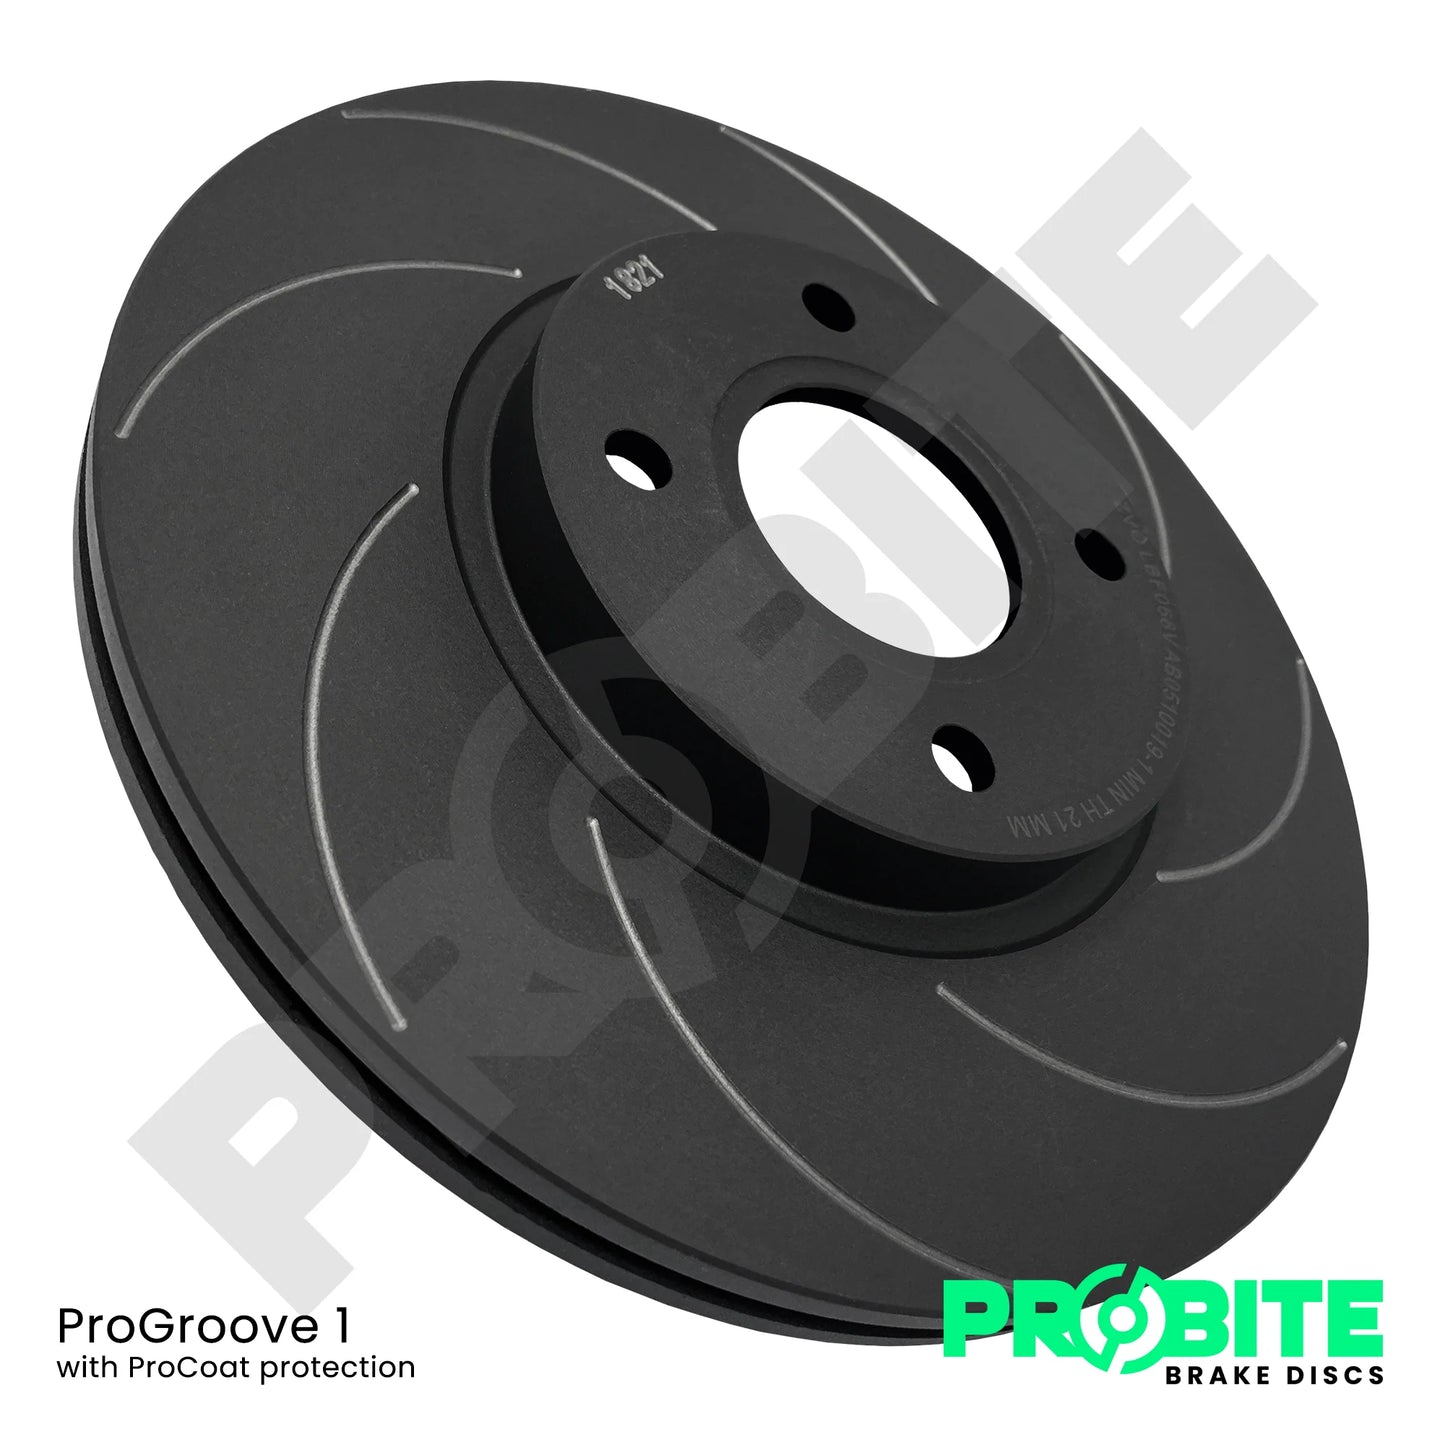 Probite 312mm Front Brake Discs for Skoda Octavia vRS Mk1 1.8T & Fabia vRS Mk1